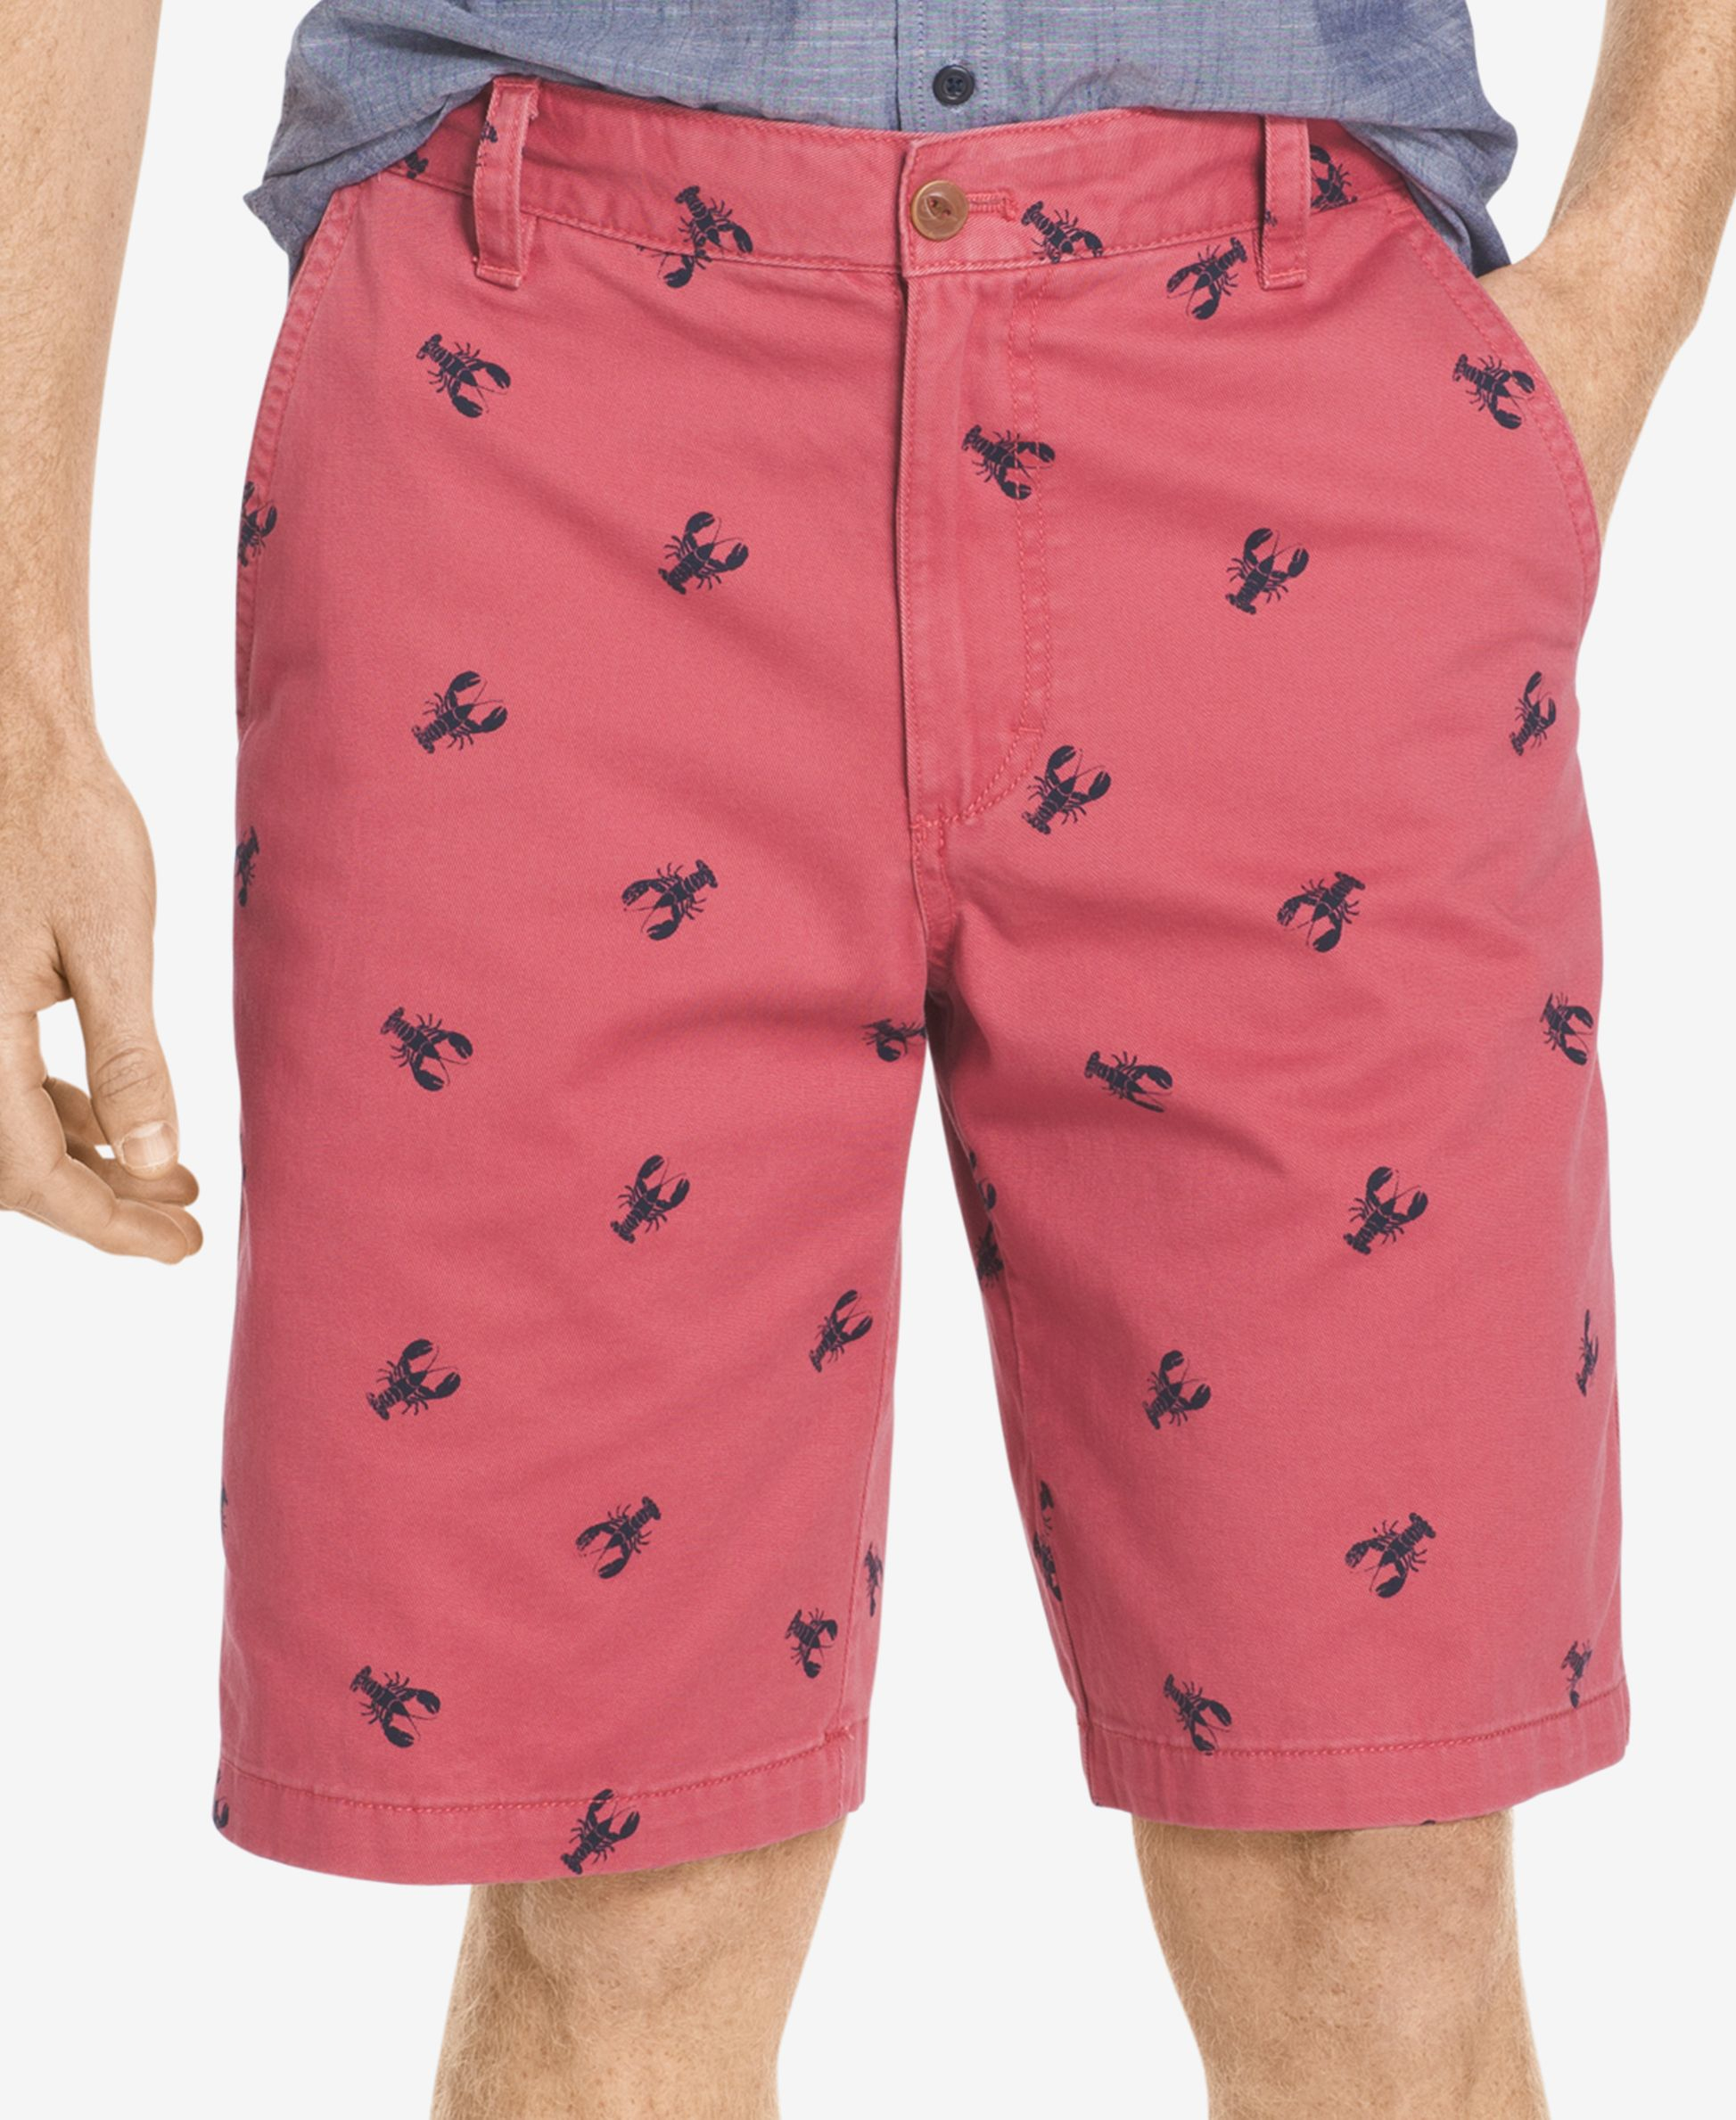 Lyst - Izod Men's Big And Tall Lobster-print Shorts for Men